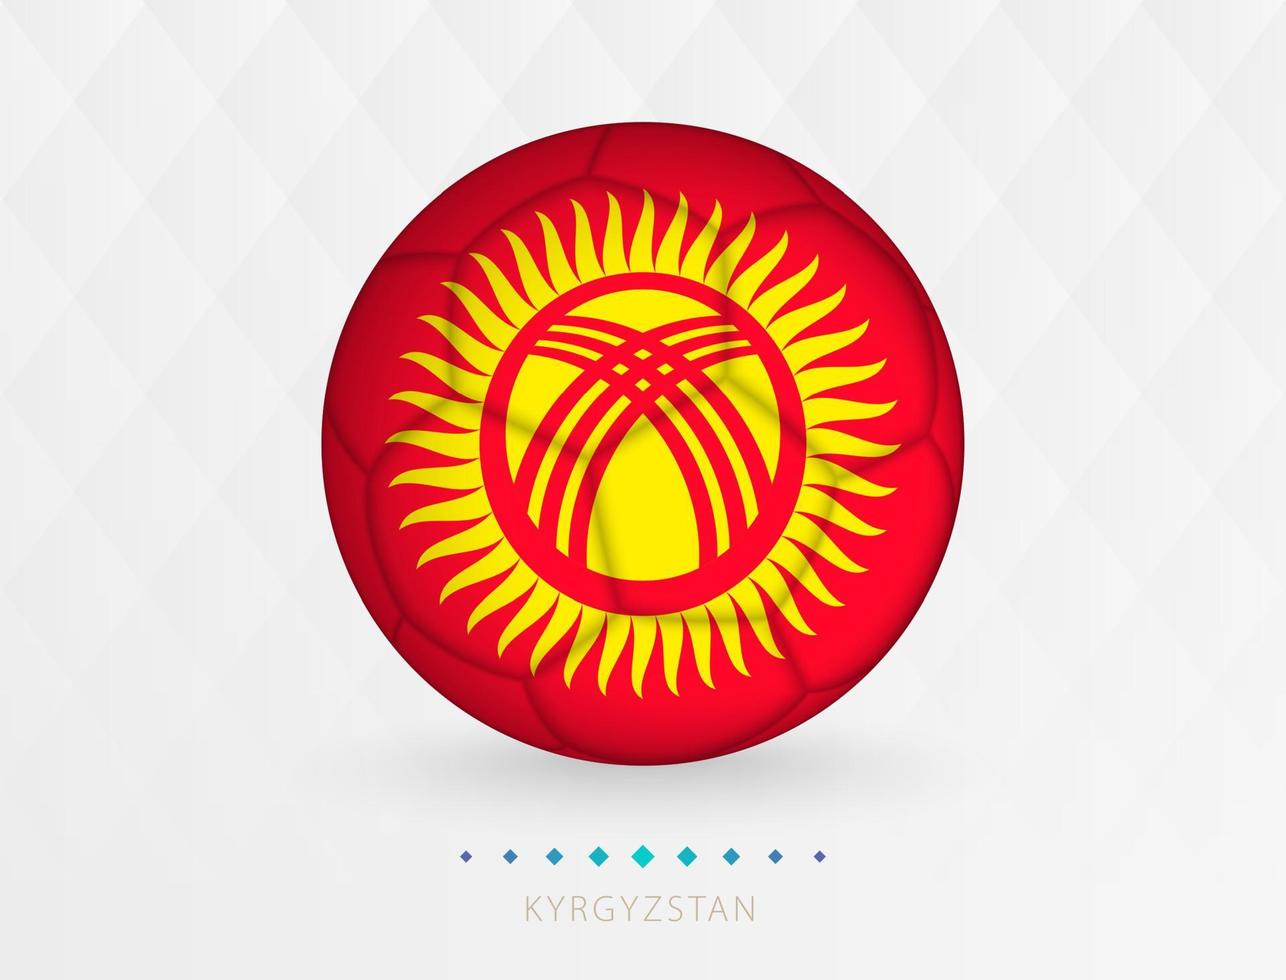 calcio palla con Kyrgyzstan bandiera modello, calcio palla con bandiera di Kyrgyzstan nazionale squadra. vettore